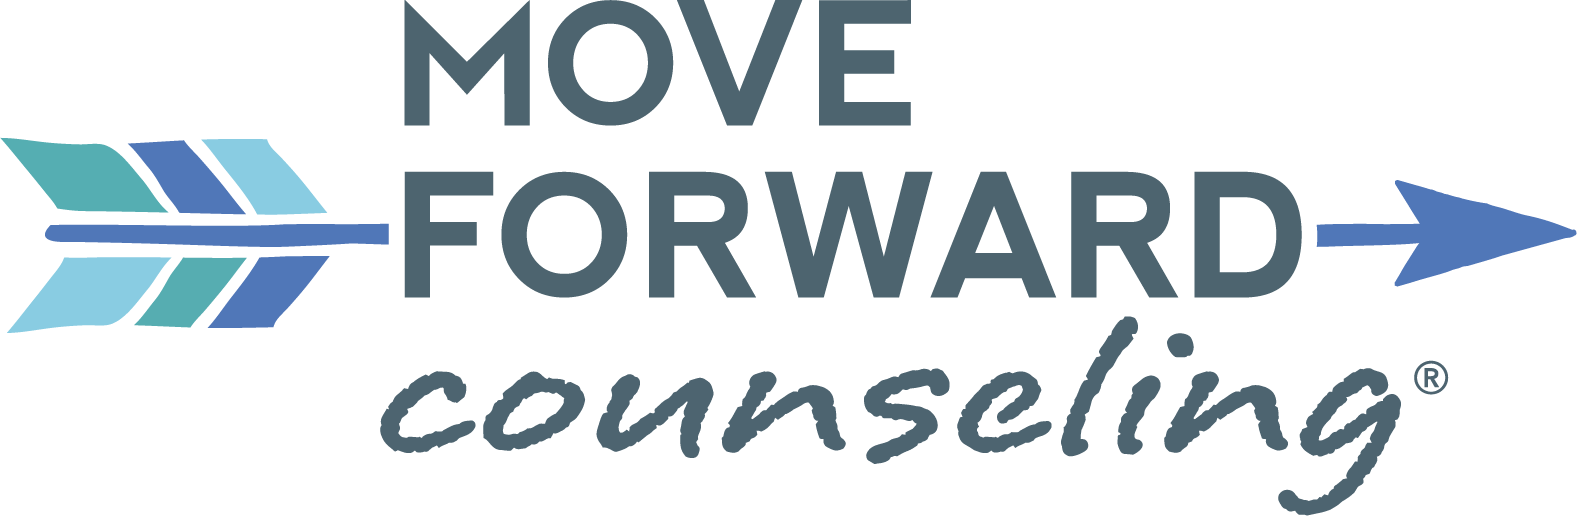 Move Forward Logo